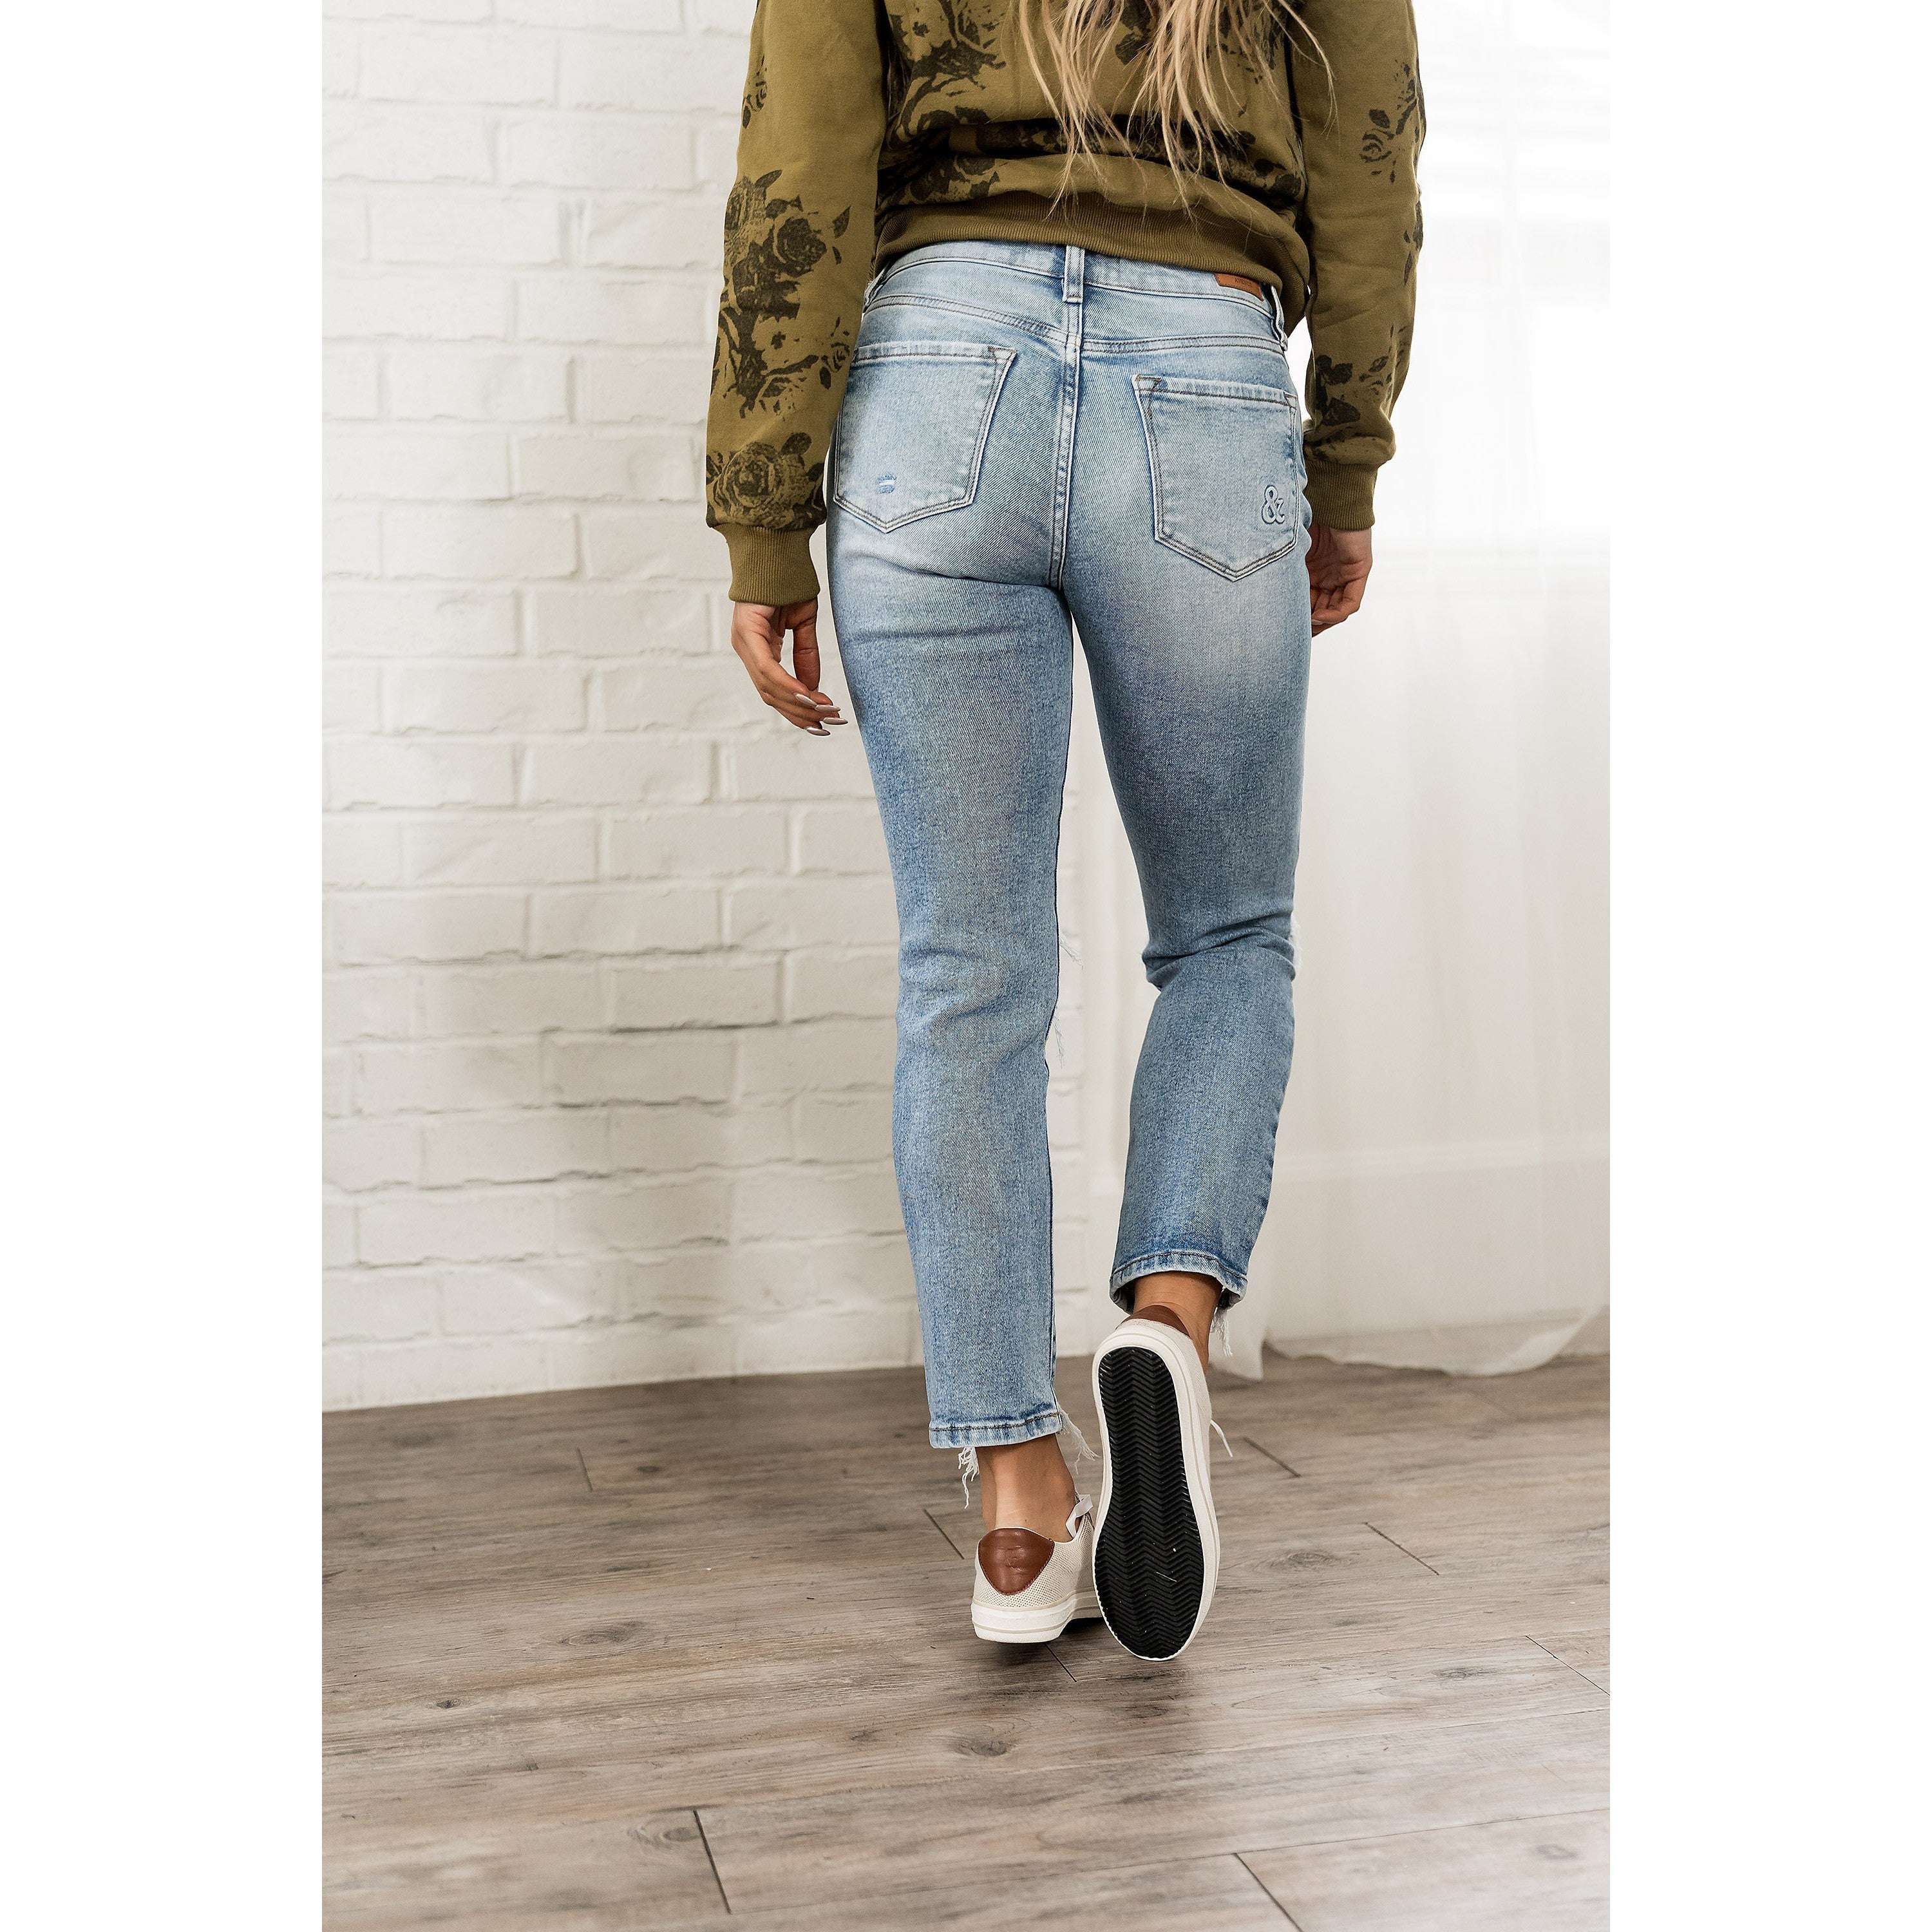 Ampersand Women's 621 High Rise Slim Straight Jeans - Medium Wash